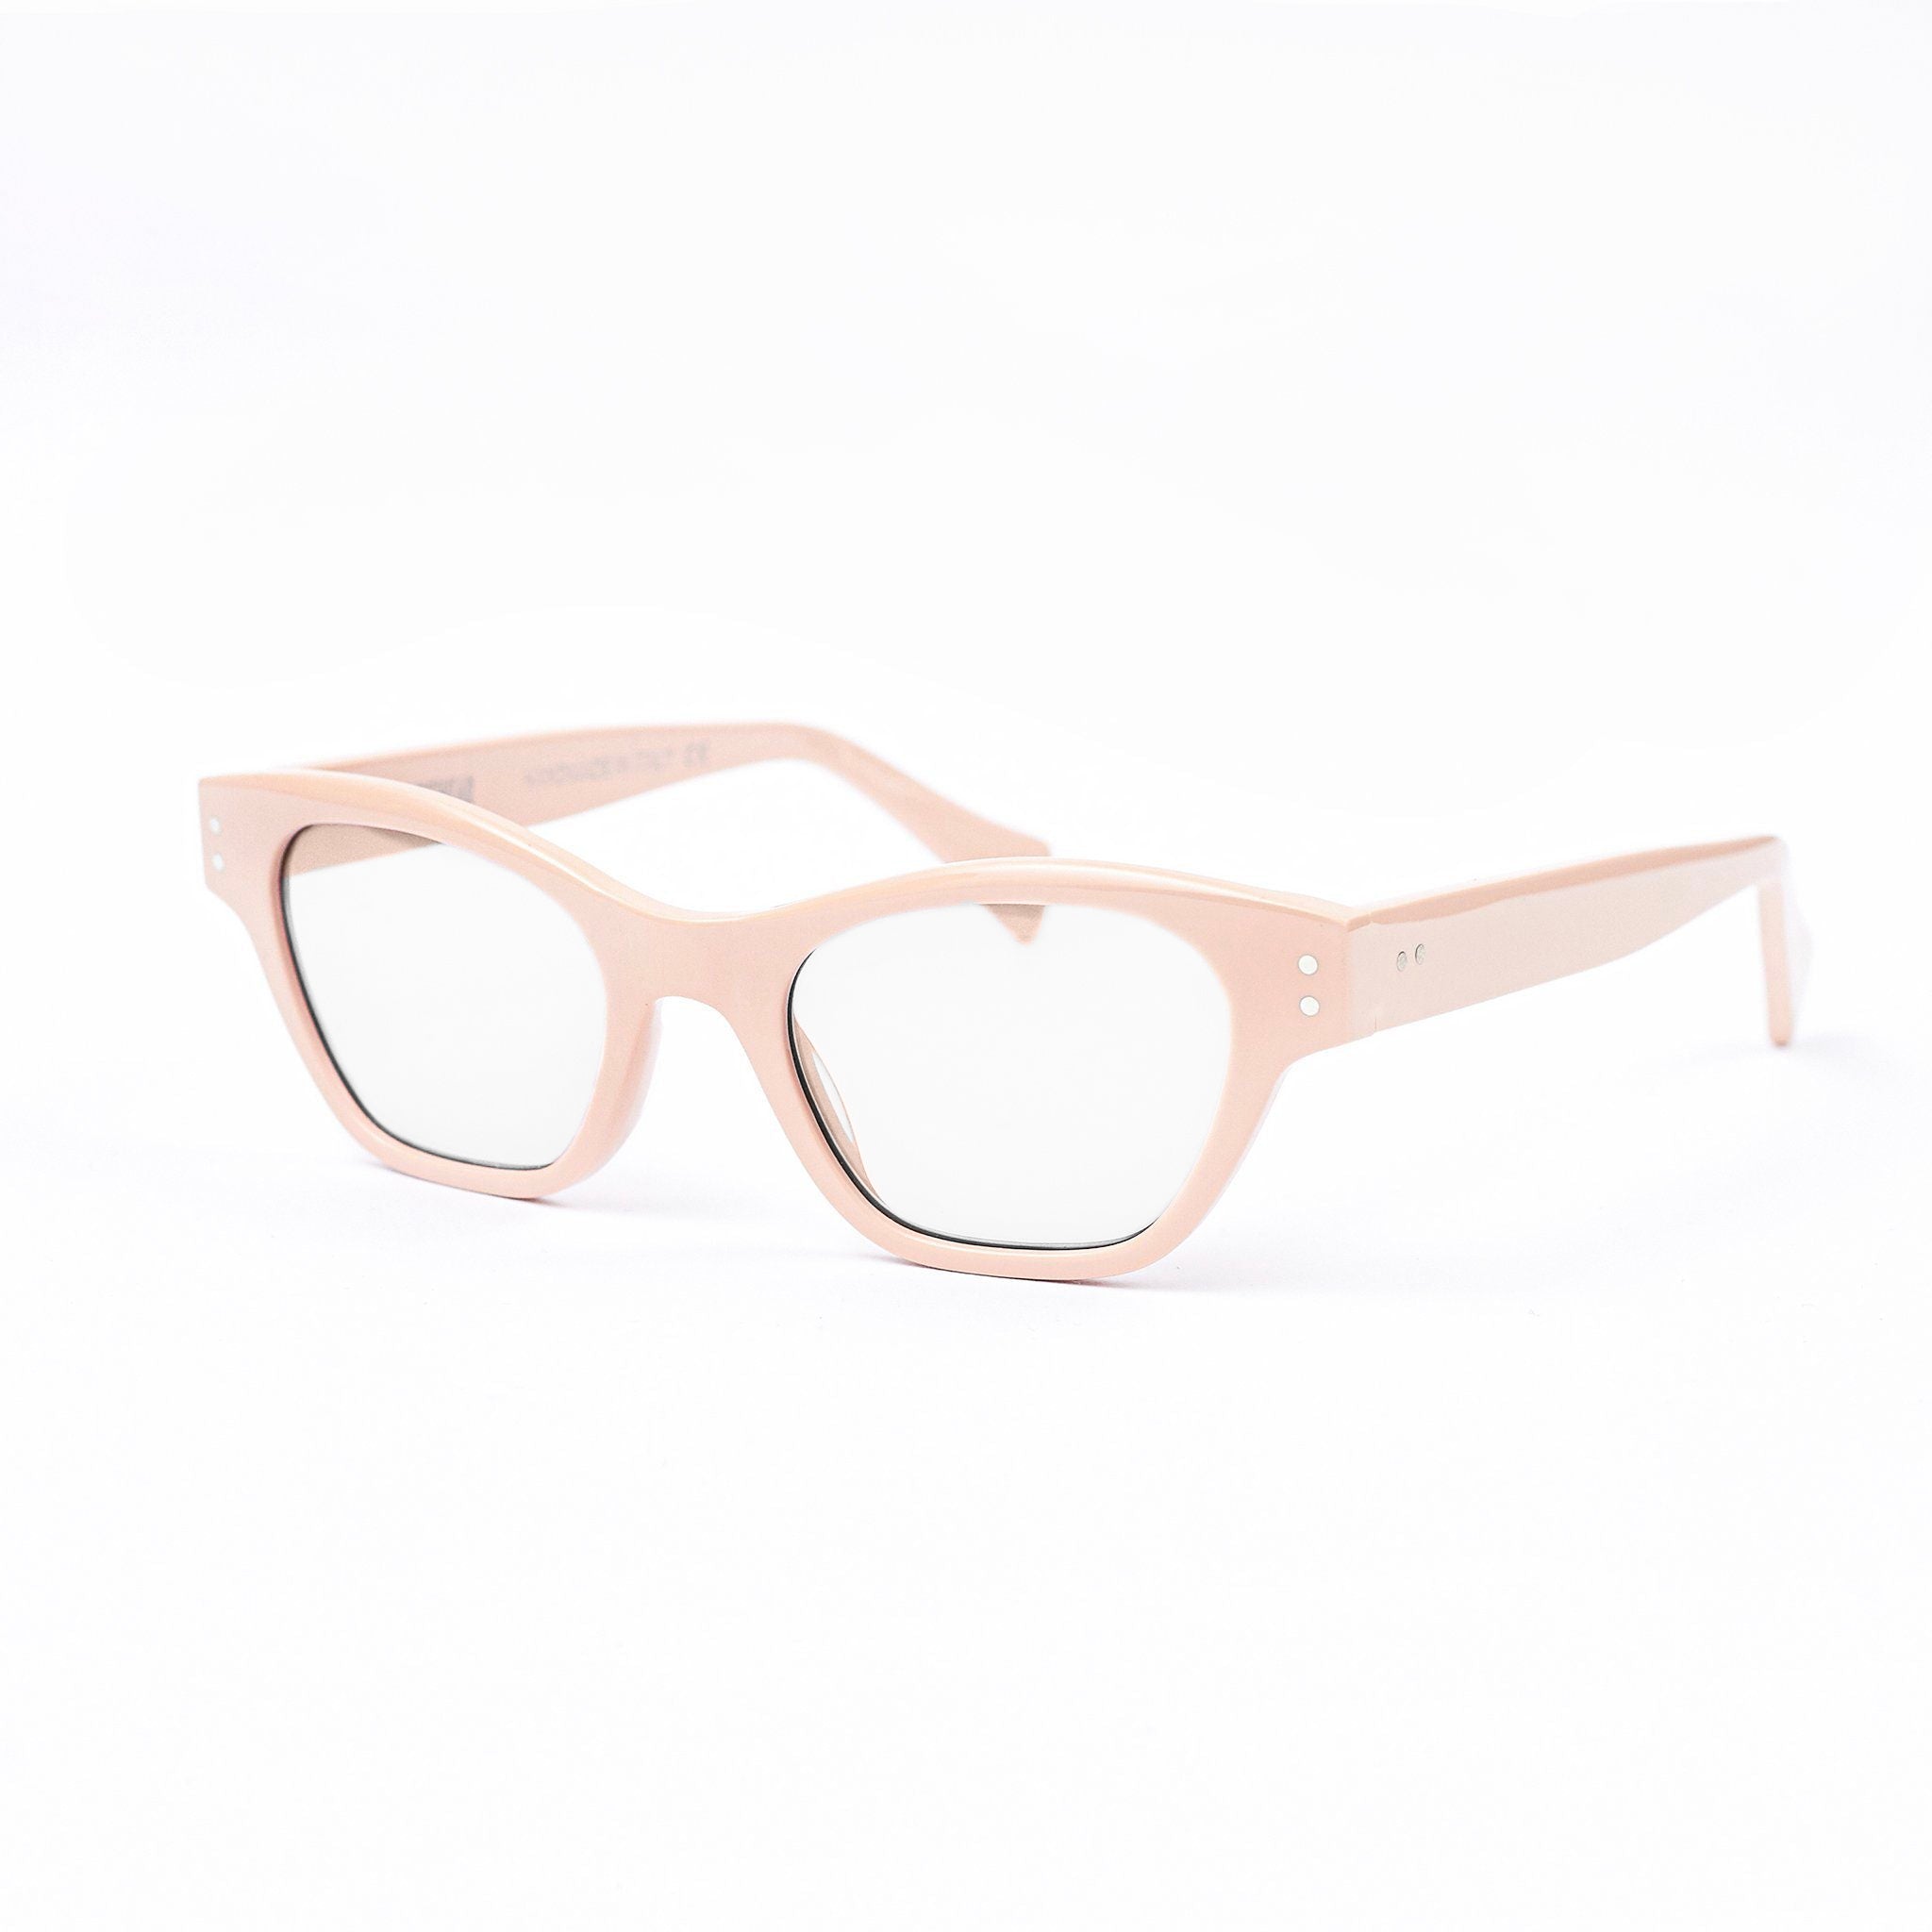 Ameos Eyewear nude cat-eye optical glasses. handmade in italy and unisex